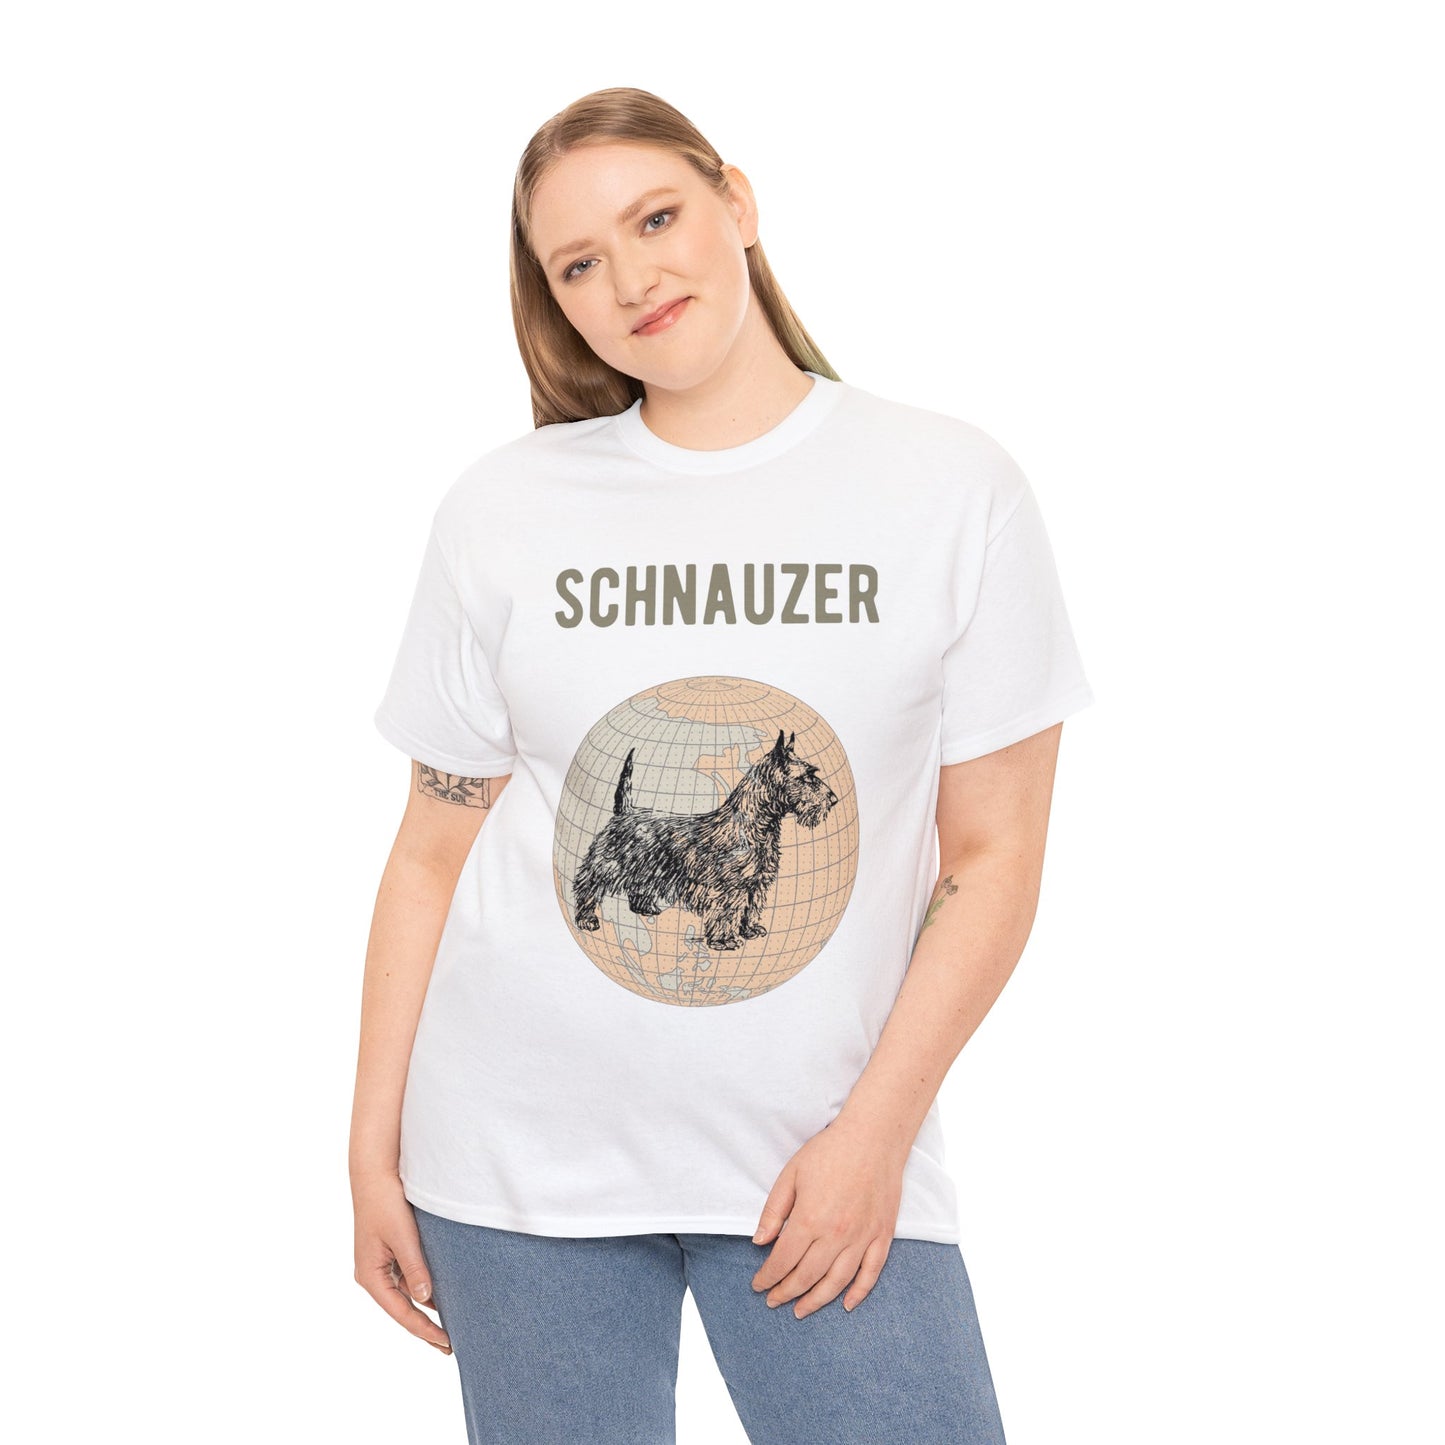 Schnauzer T-Shirt, Old- World Map Tee